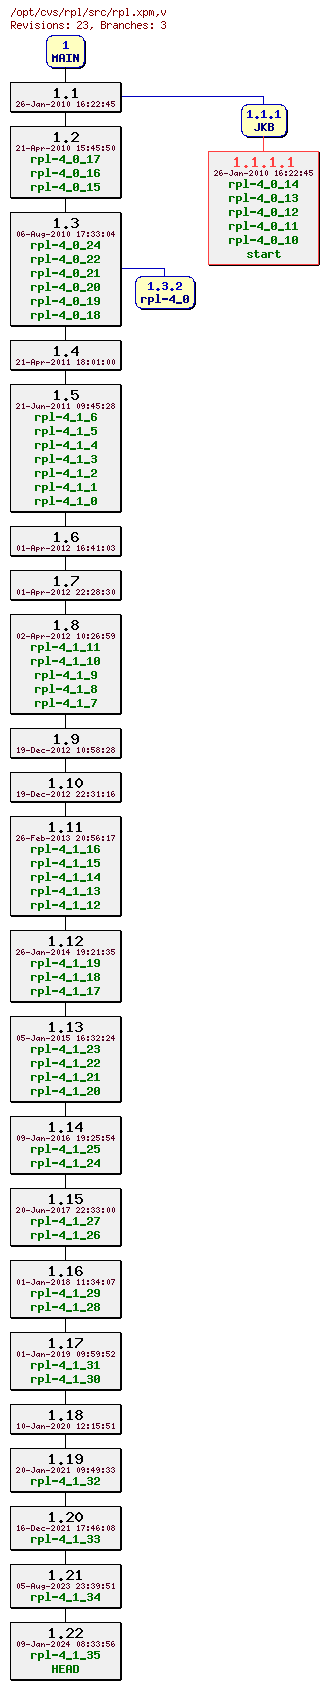 Revision graph of rpl/src/rpl.xpm